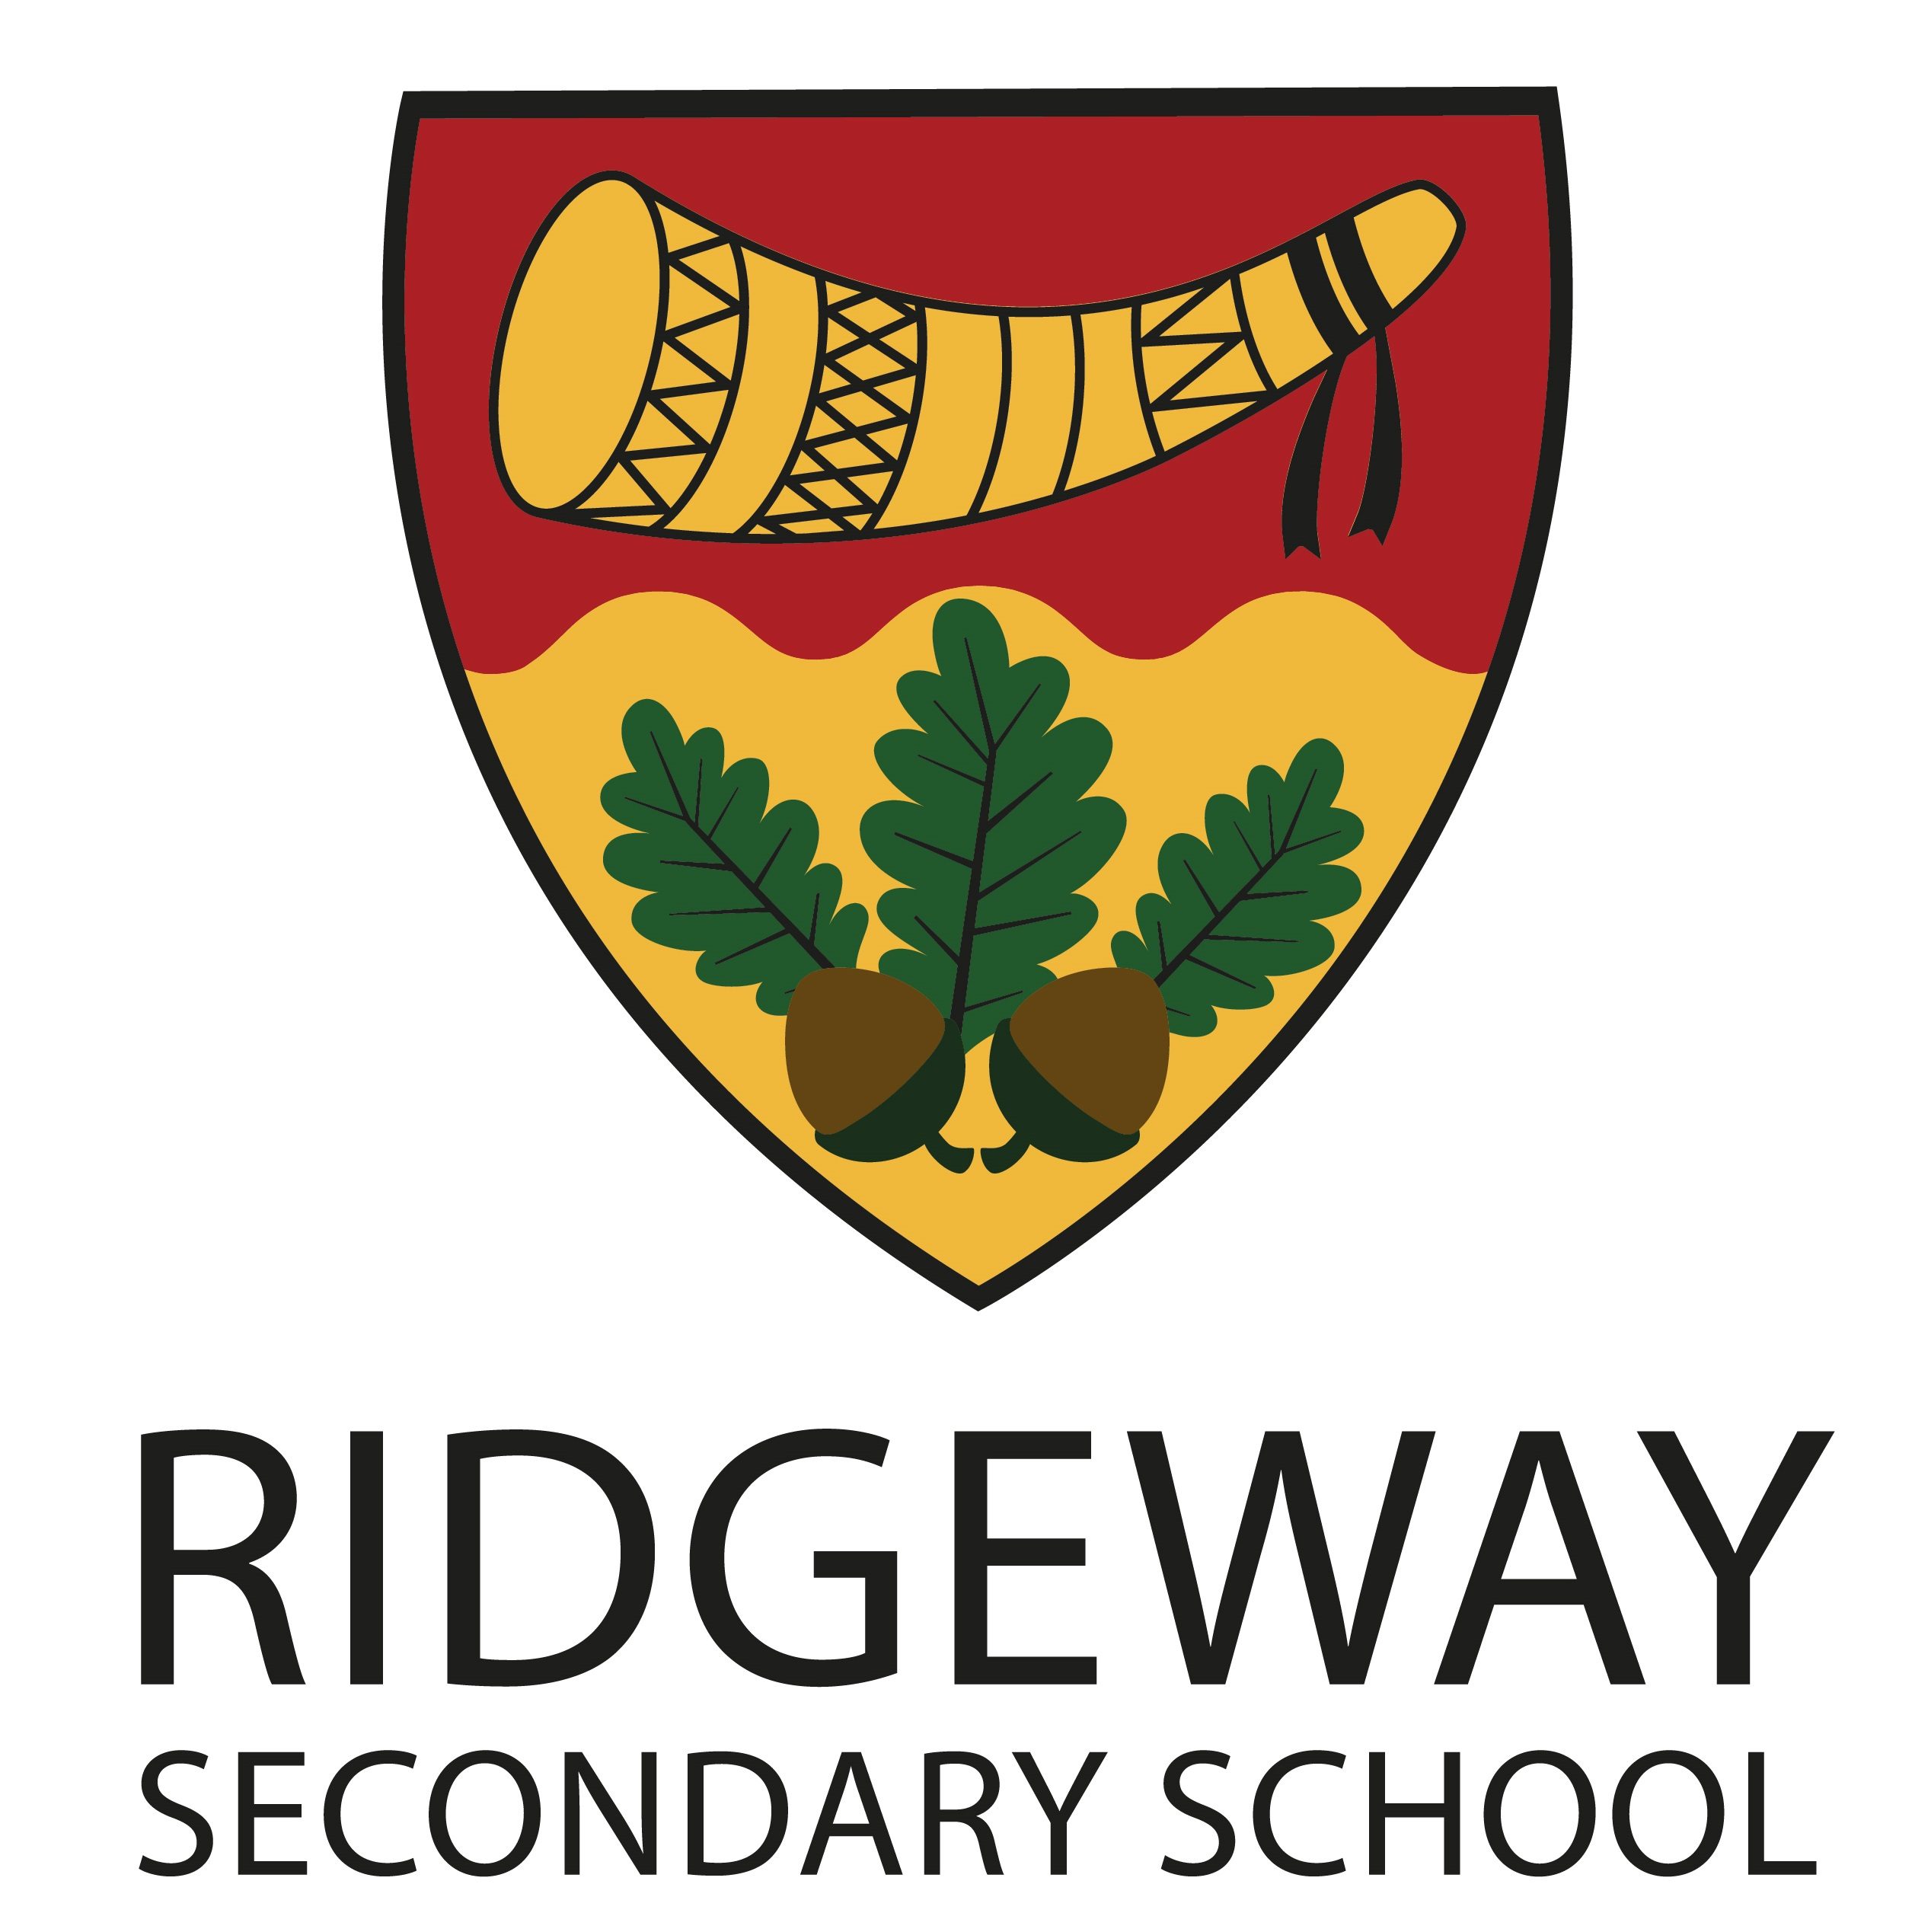 Ridgeway Secondary School : Read More